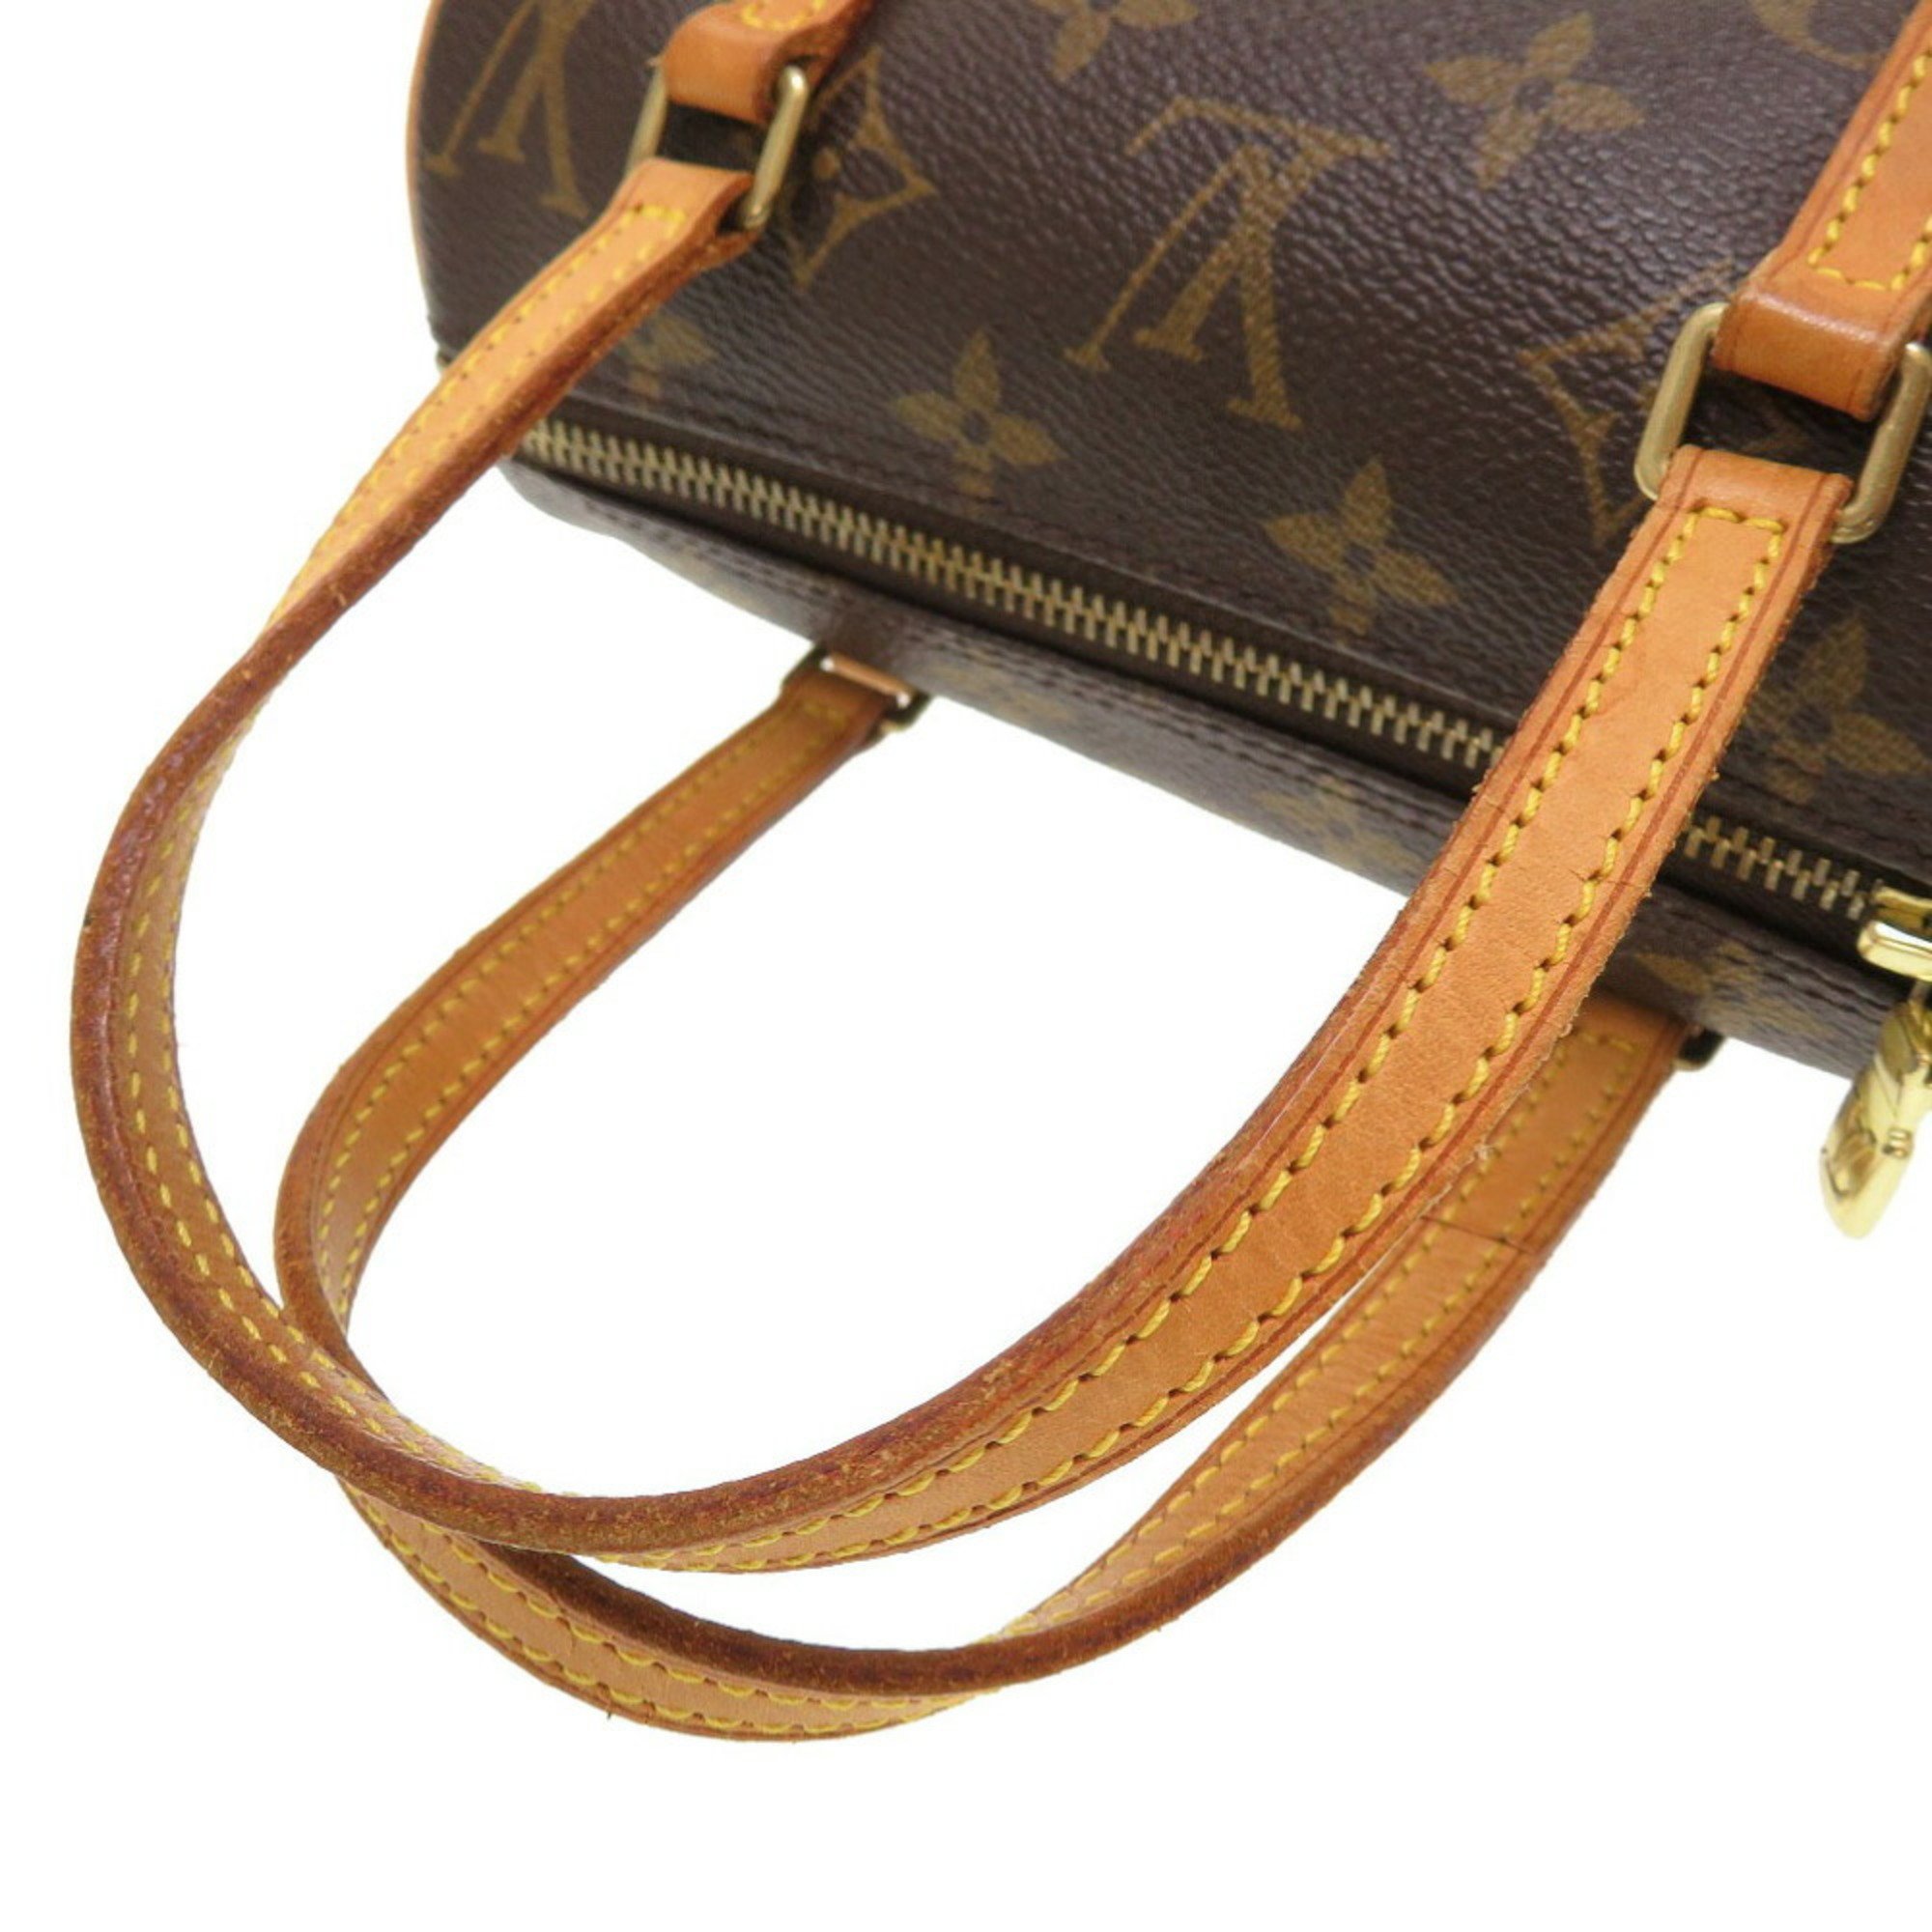 Louis Vuitton Monogram Papillon 19 M51389 Handbag